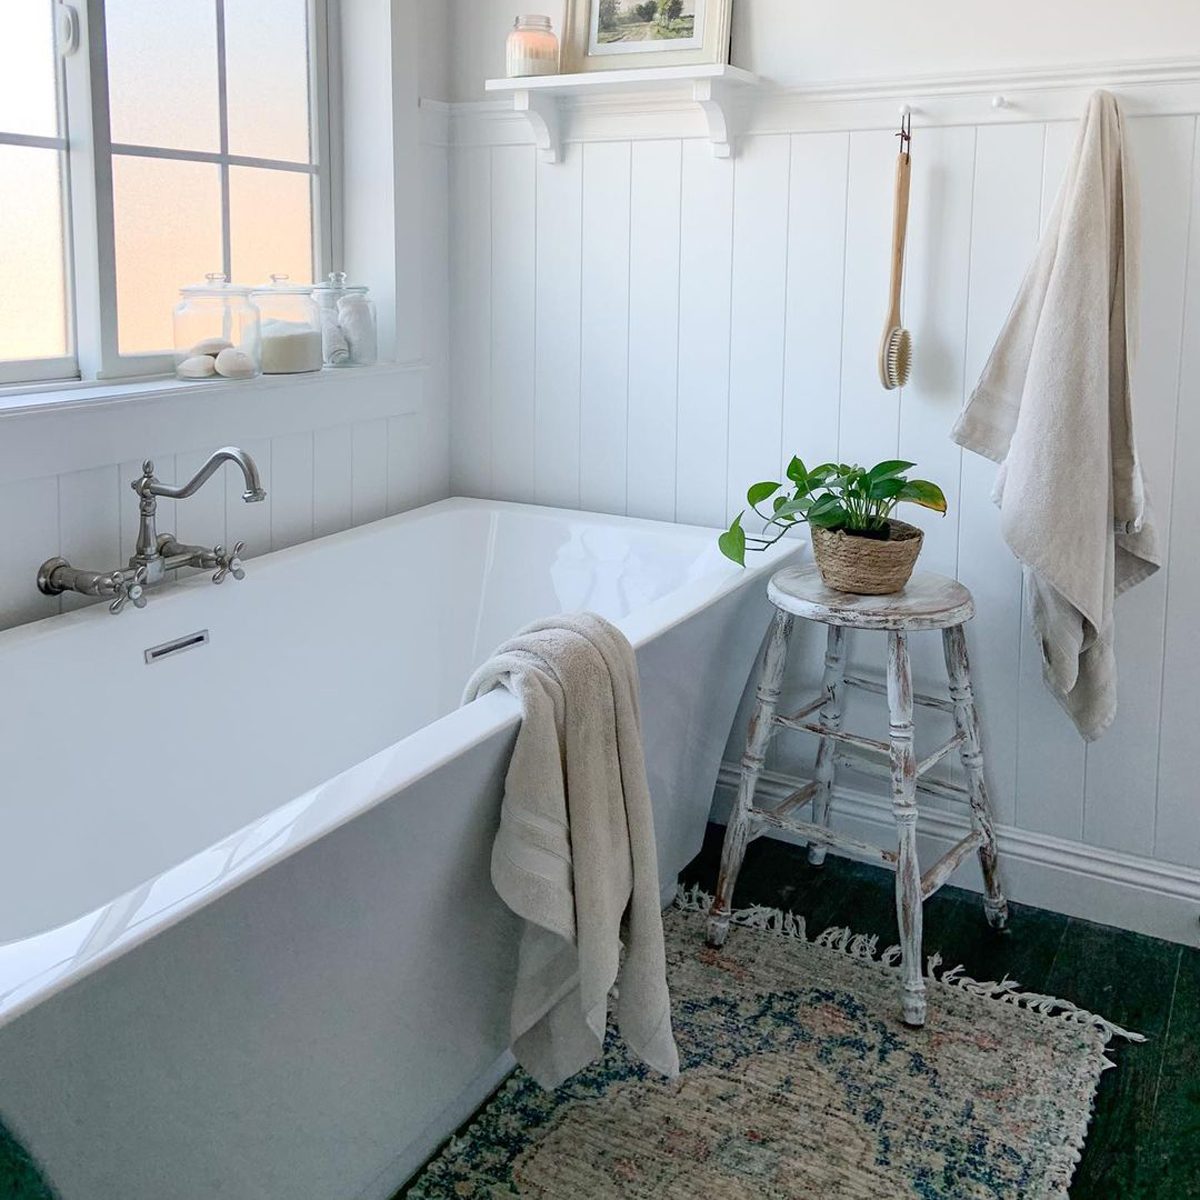 A bathtub inside a bathroom with white wall paneling